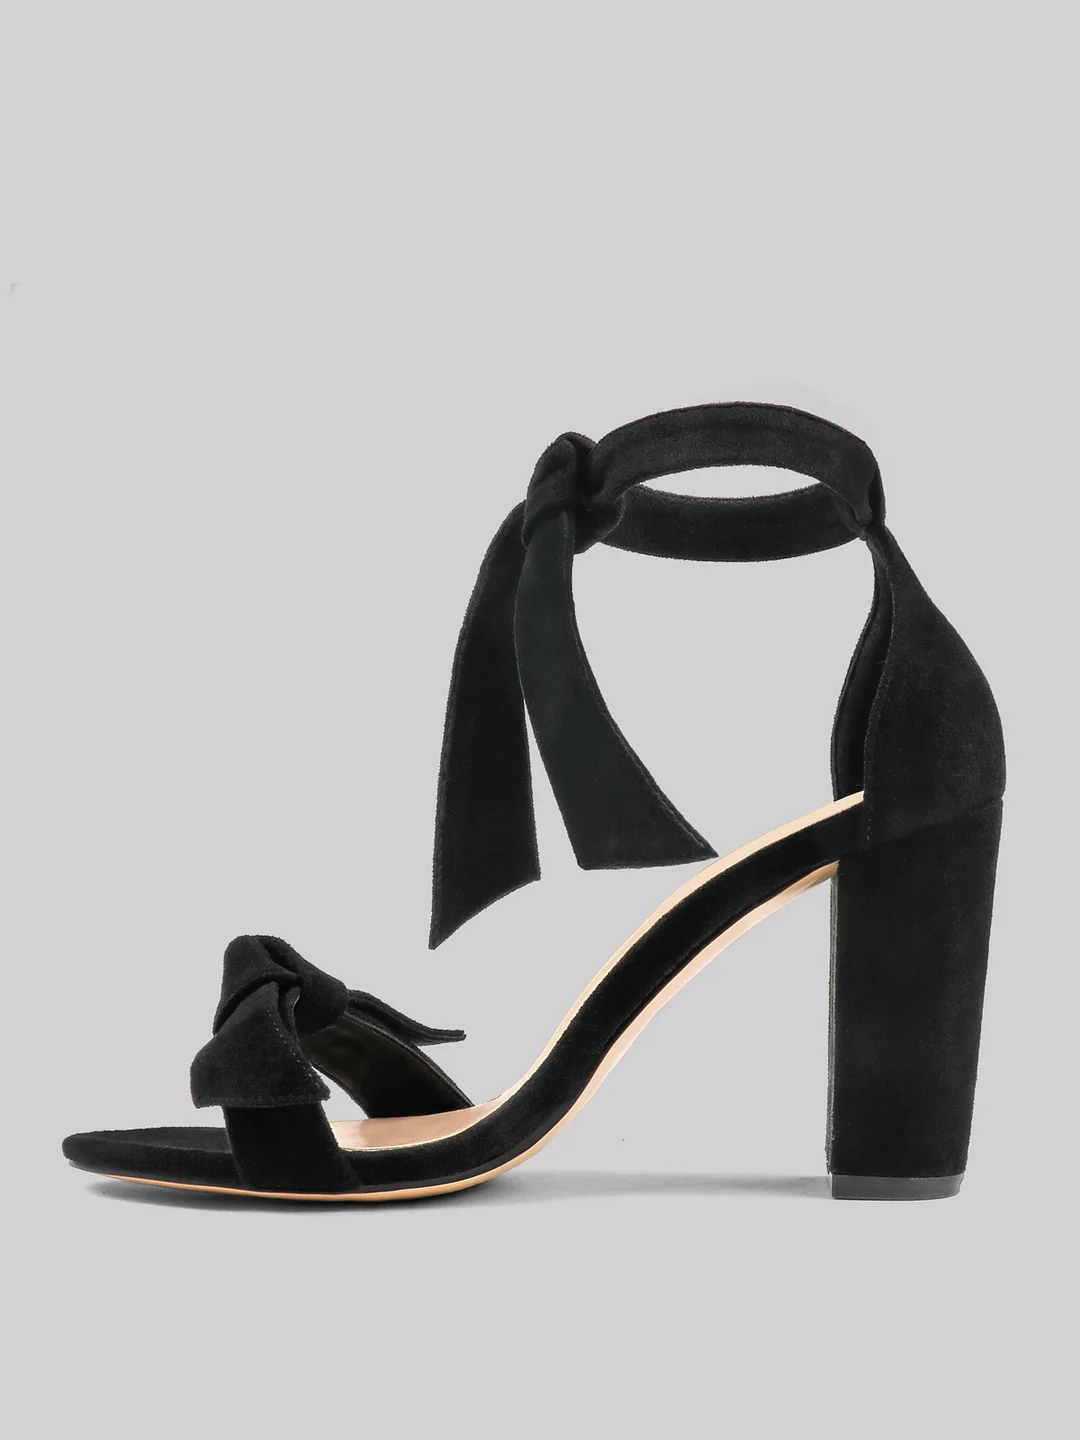 90mm Women's Ankle Strap Pumps Block Heel Dress Party Suede Sandals Summer Shoes